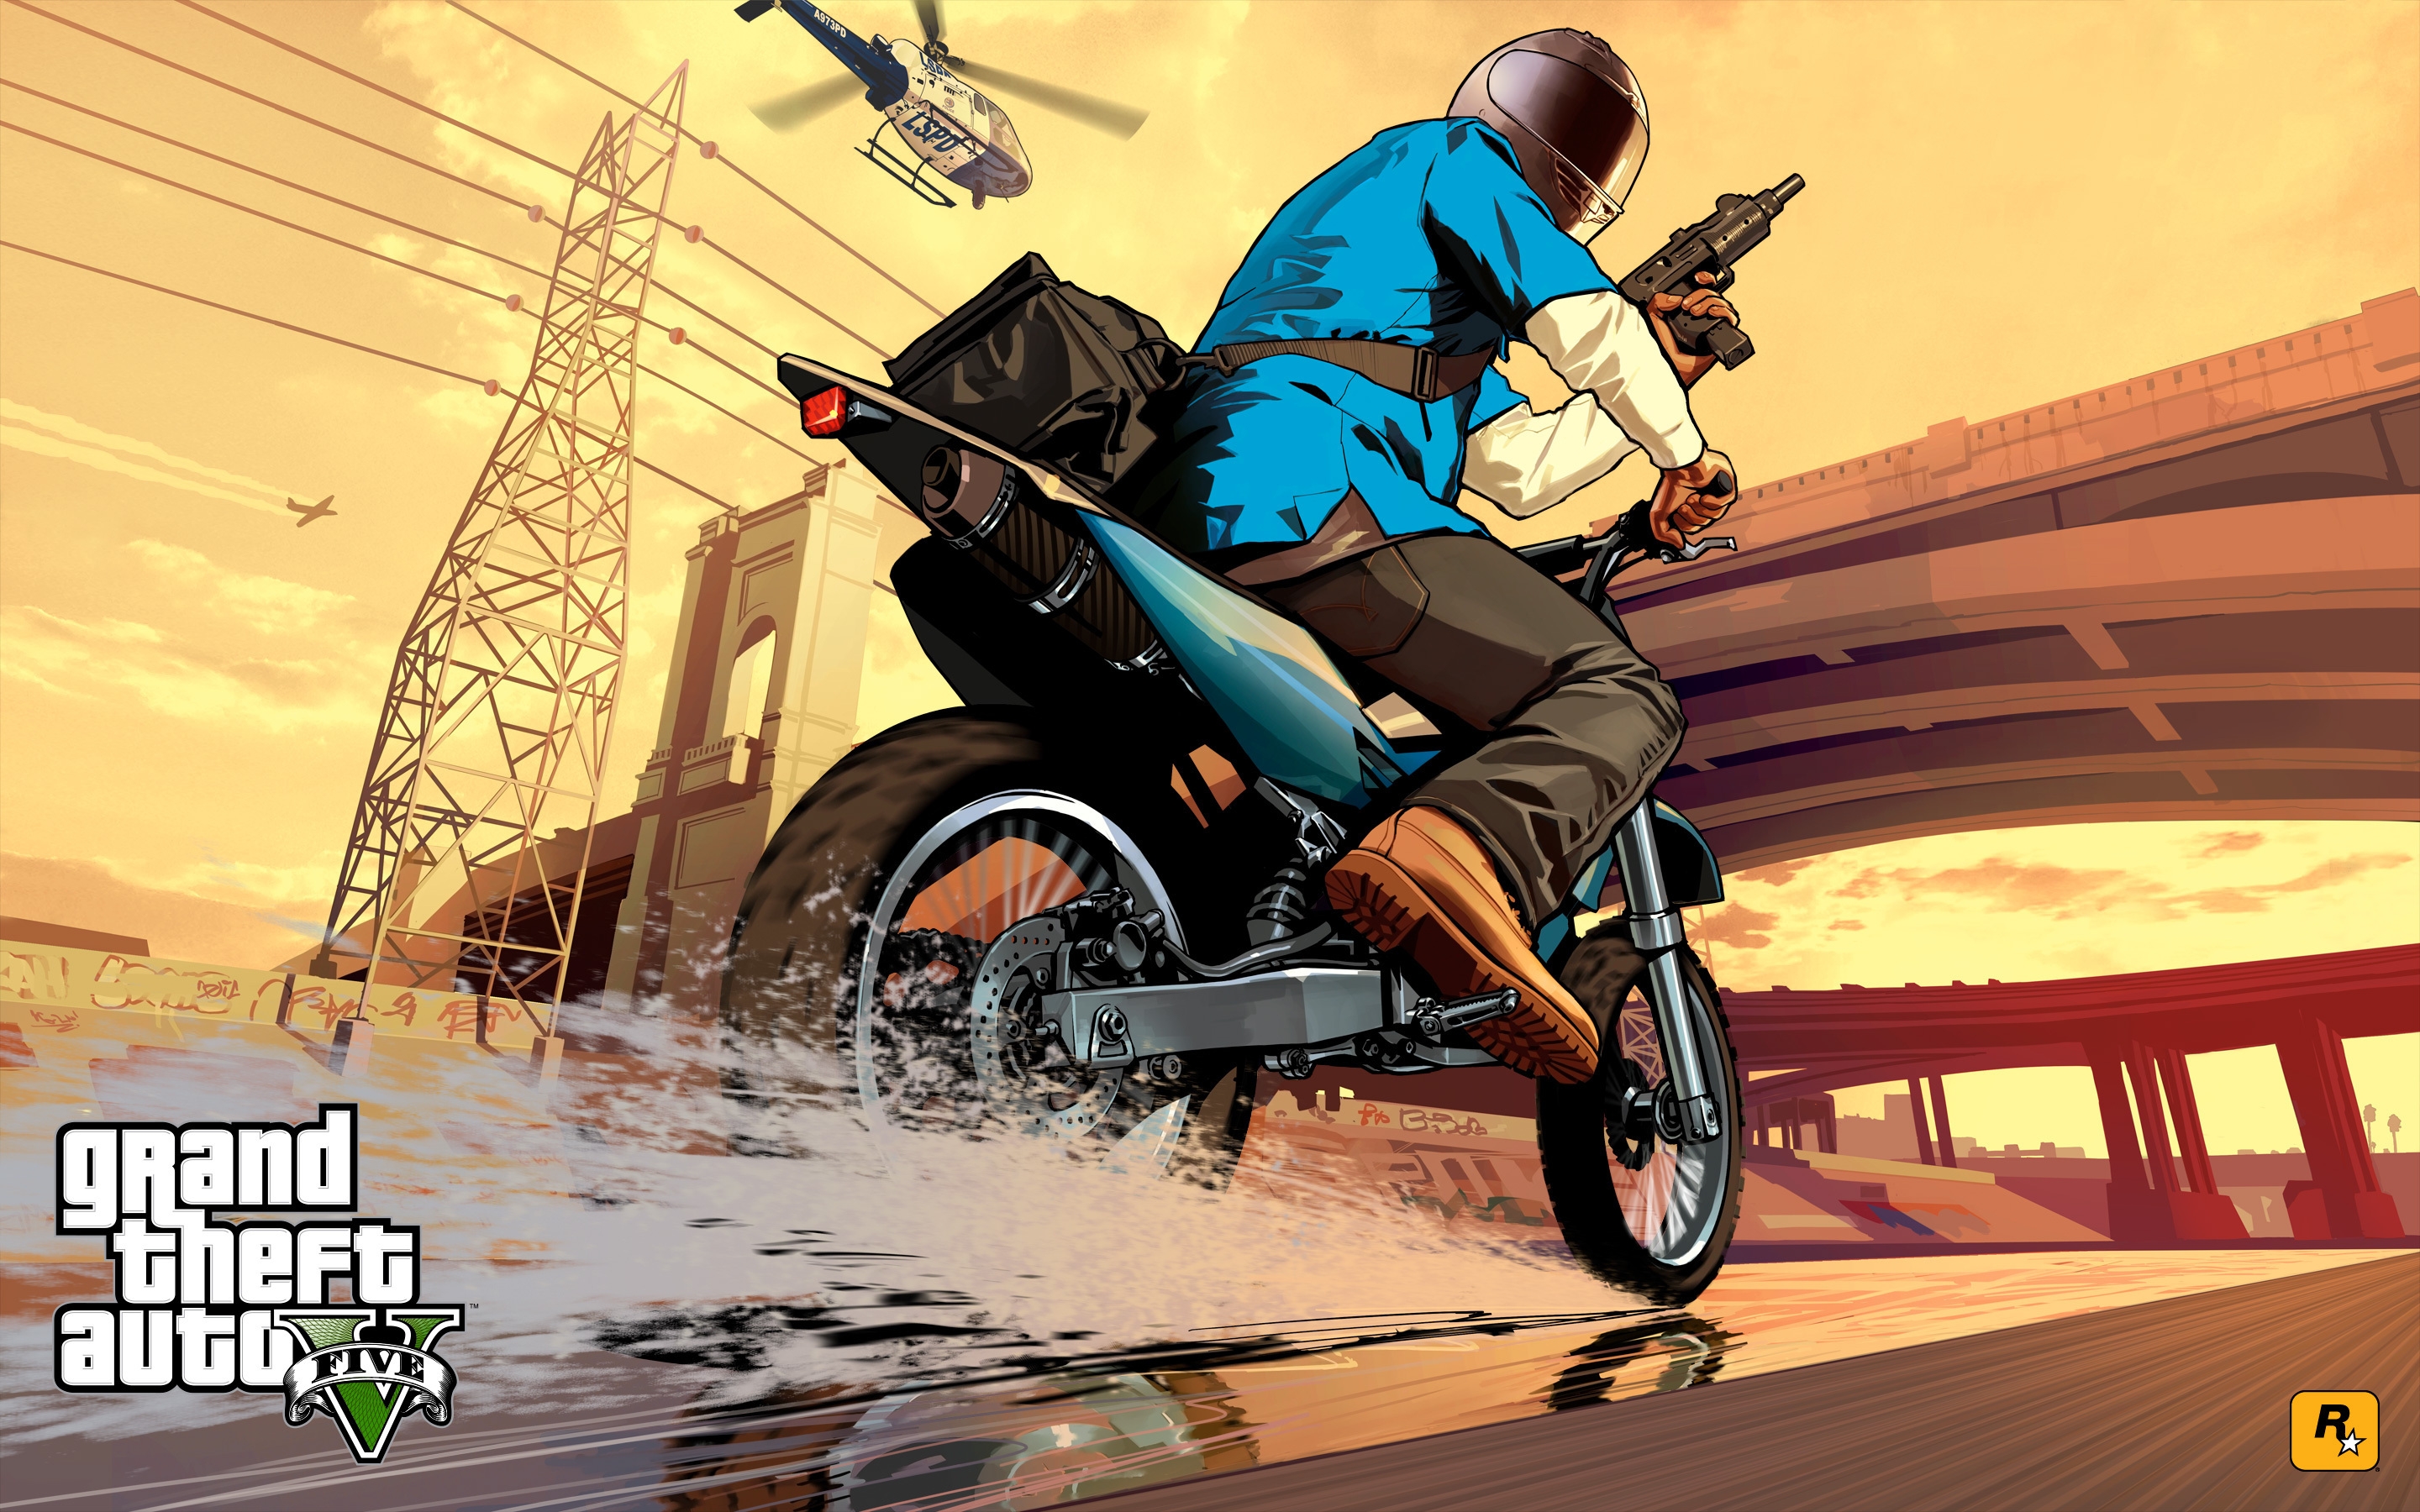 Grand Theft Auto V Poster for 2880 x 1800 Retina Display resolution